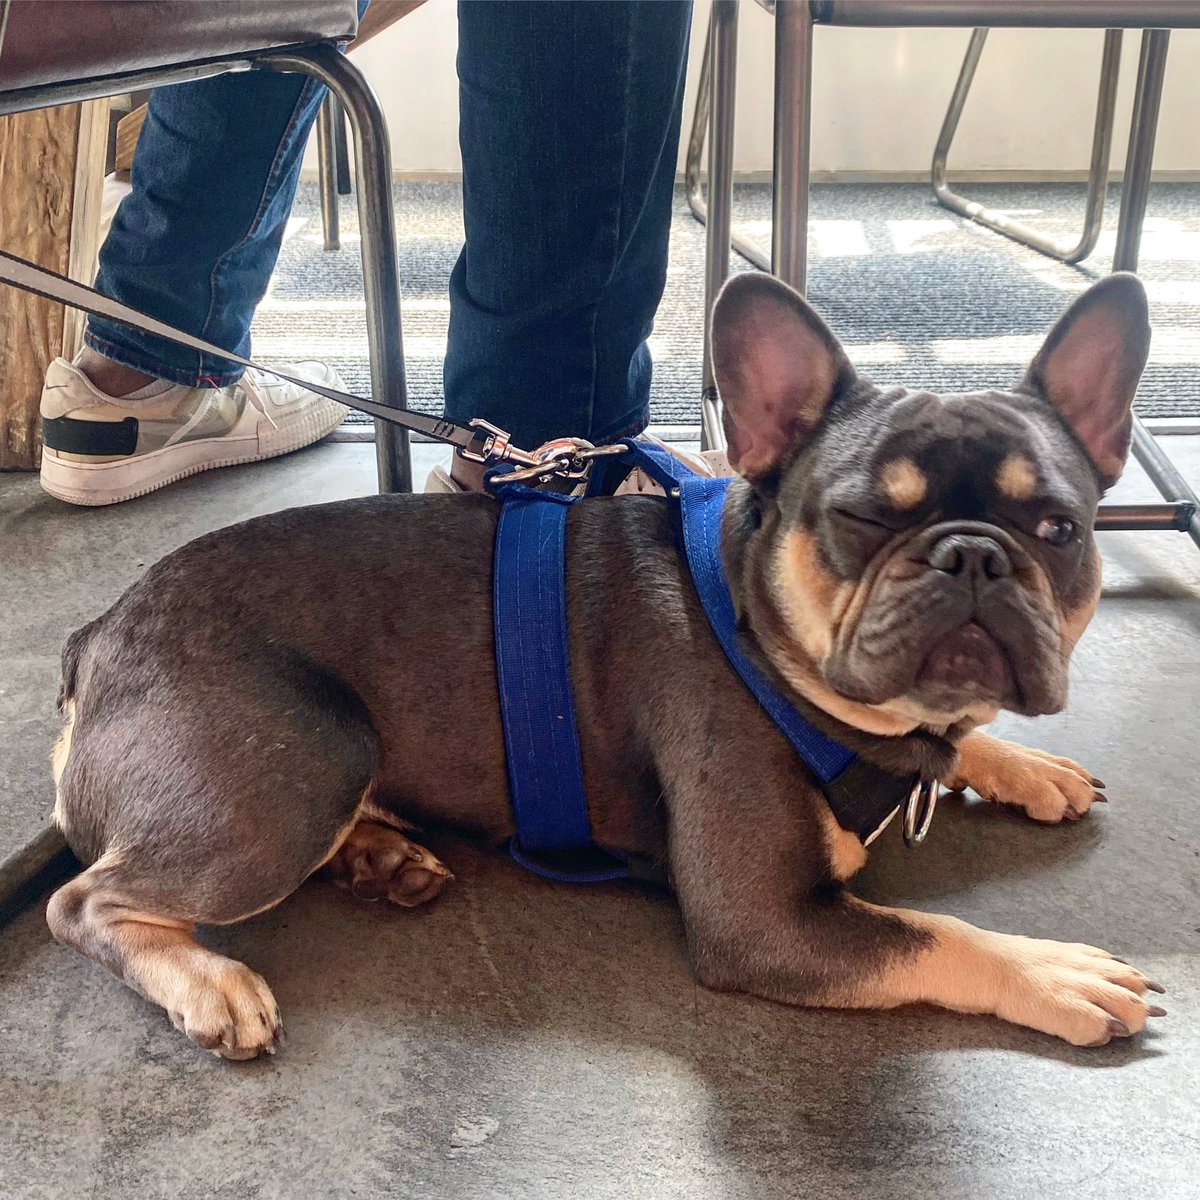 Benji, always keeping eye out on our treat station.

#pupslovepubs
#dogfriendly #dogoftheday #dogsofinstagram #dogfriendlylondon #dogfriendlypub